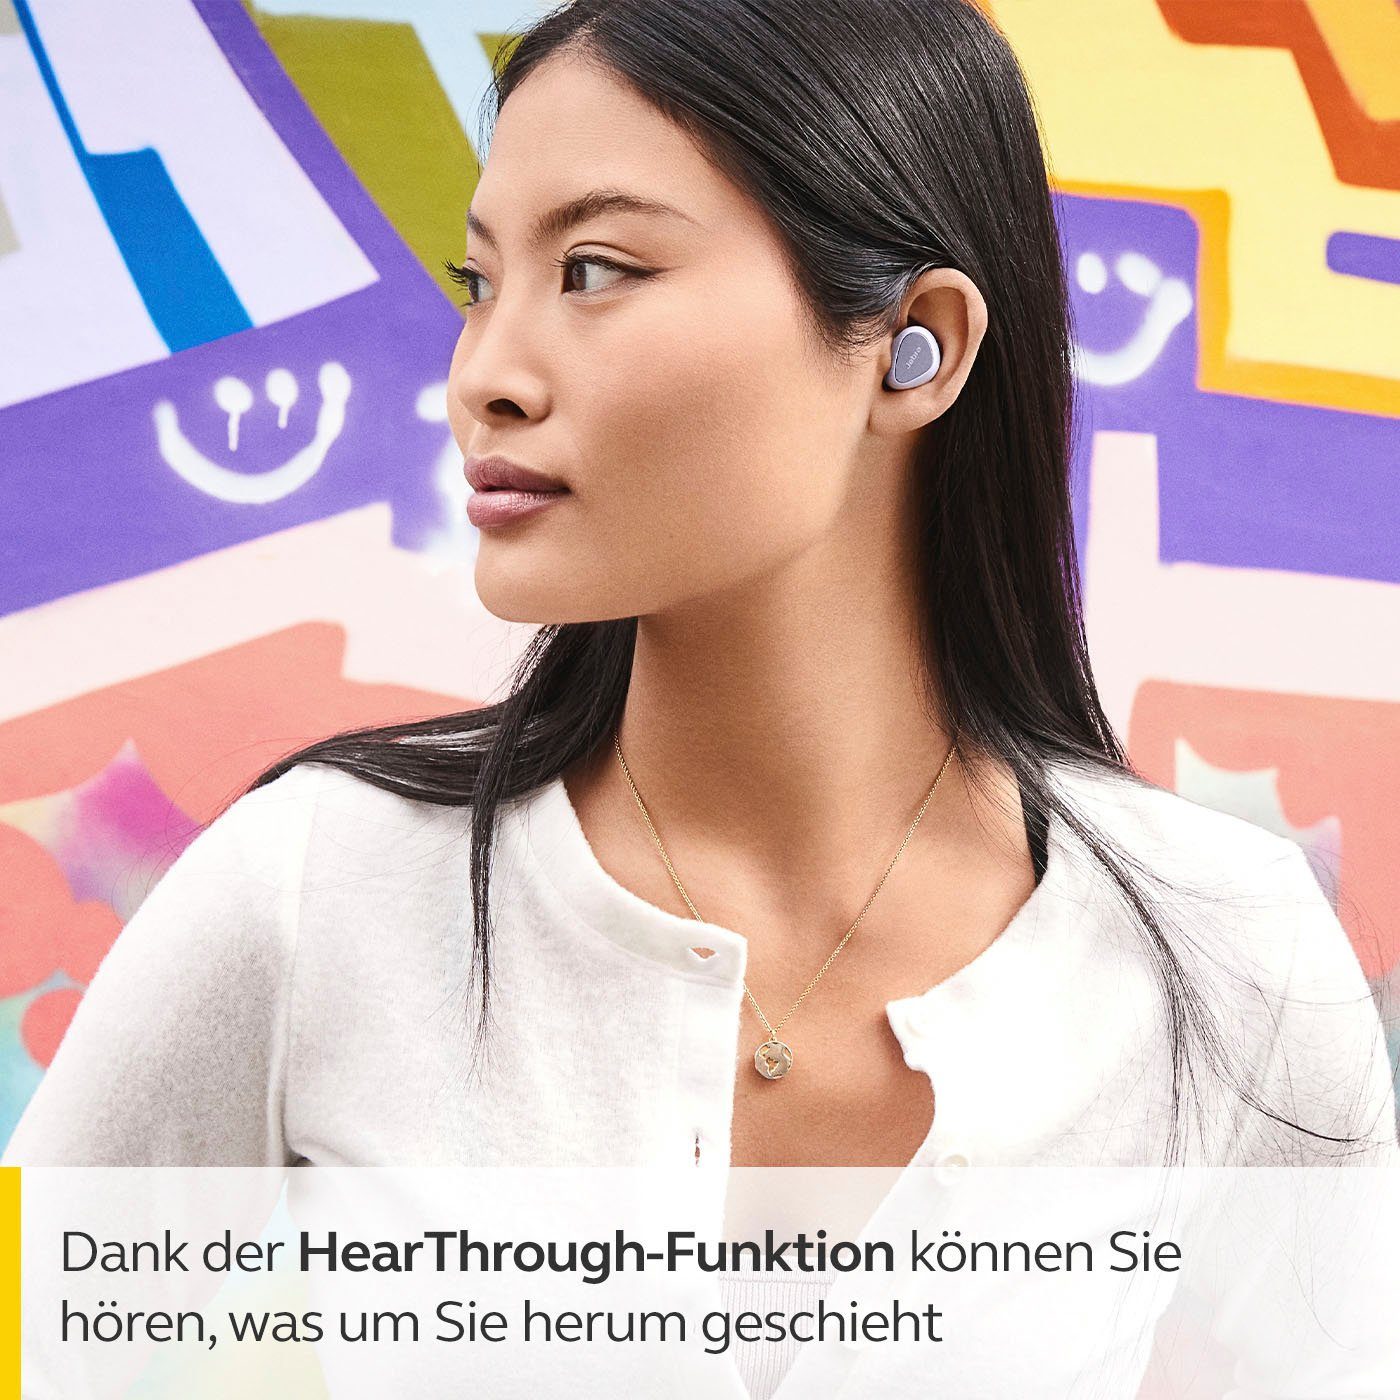 Jabra Elite 3 In-Ear-Kopfhörer Alexa, Siri, Bluetooth) lila Assistant, Google (Geräuschisolierung